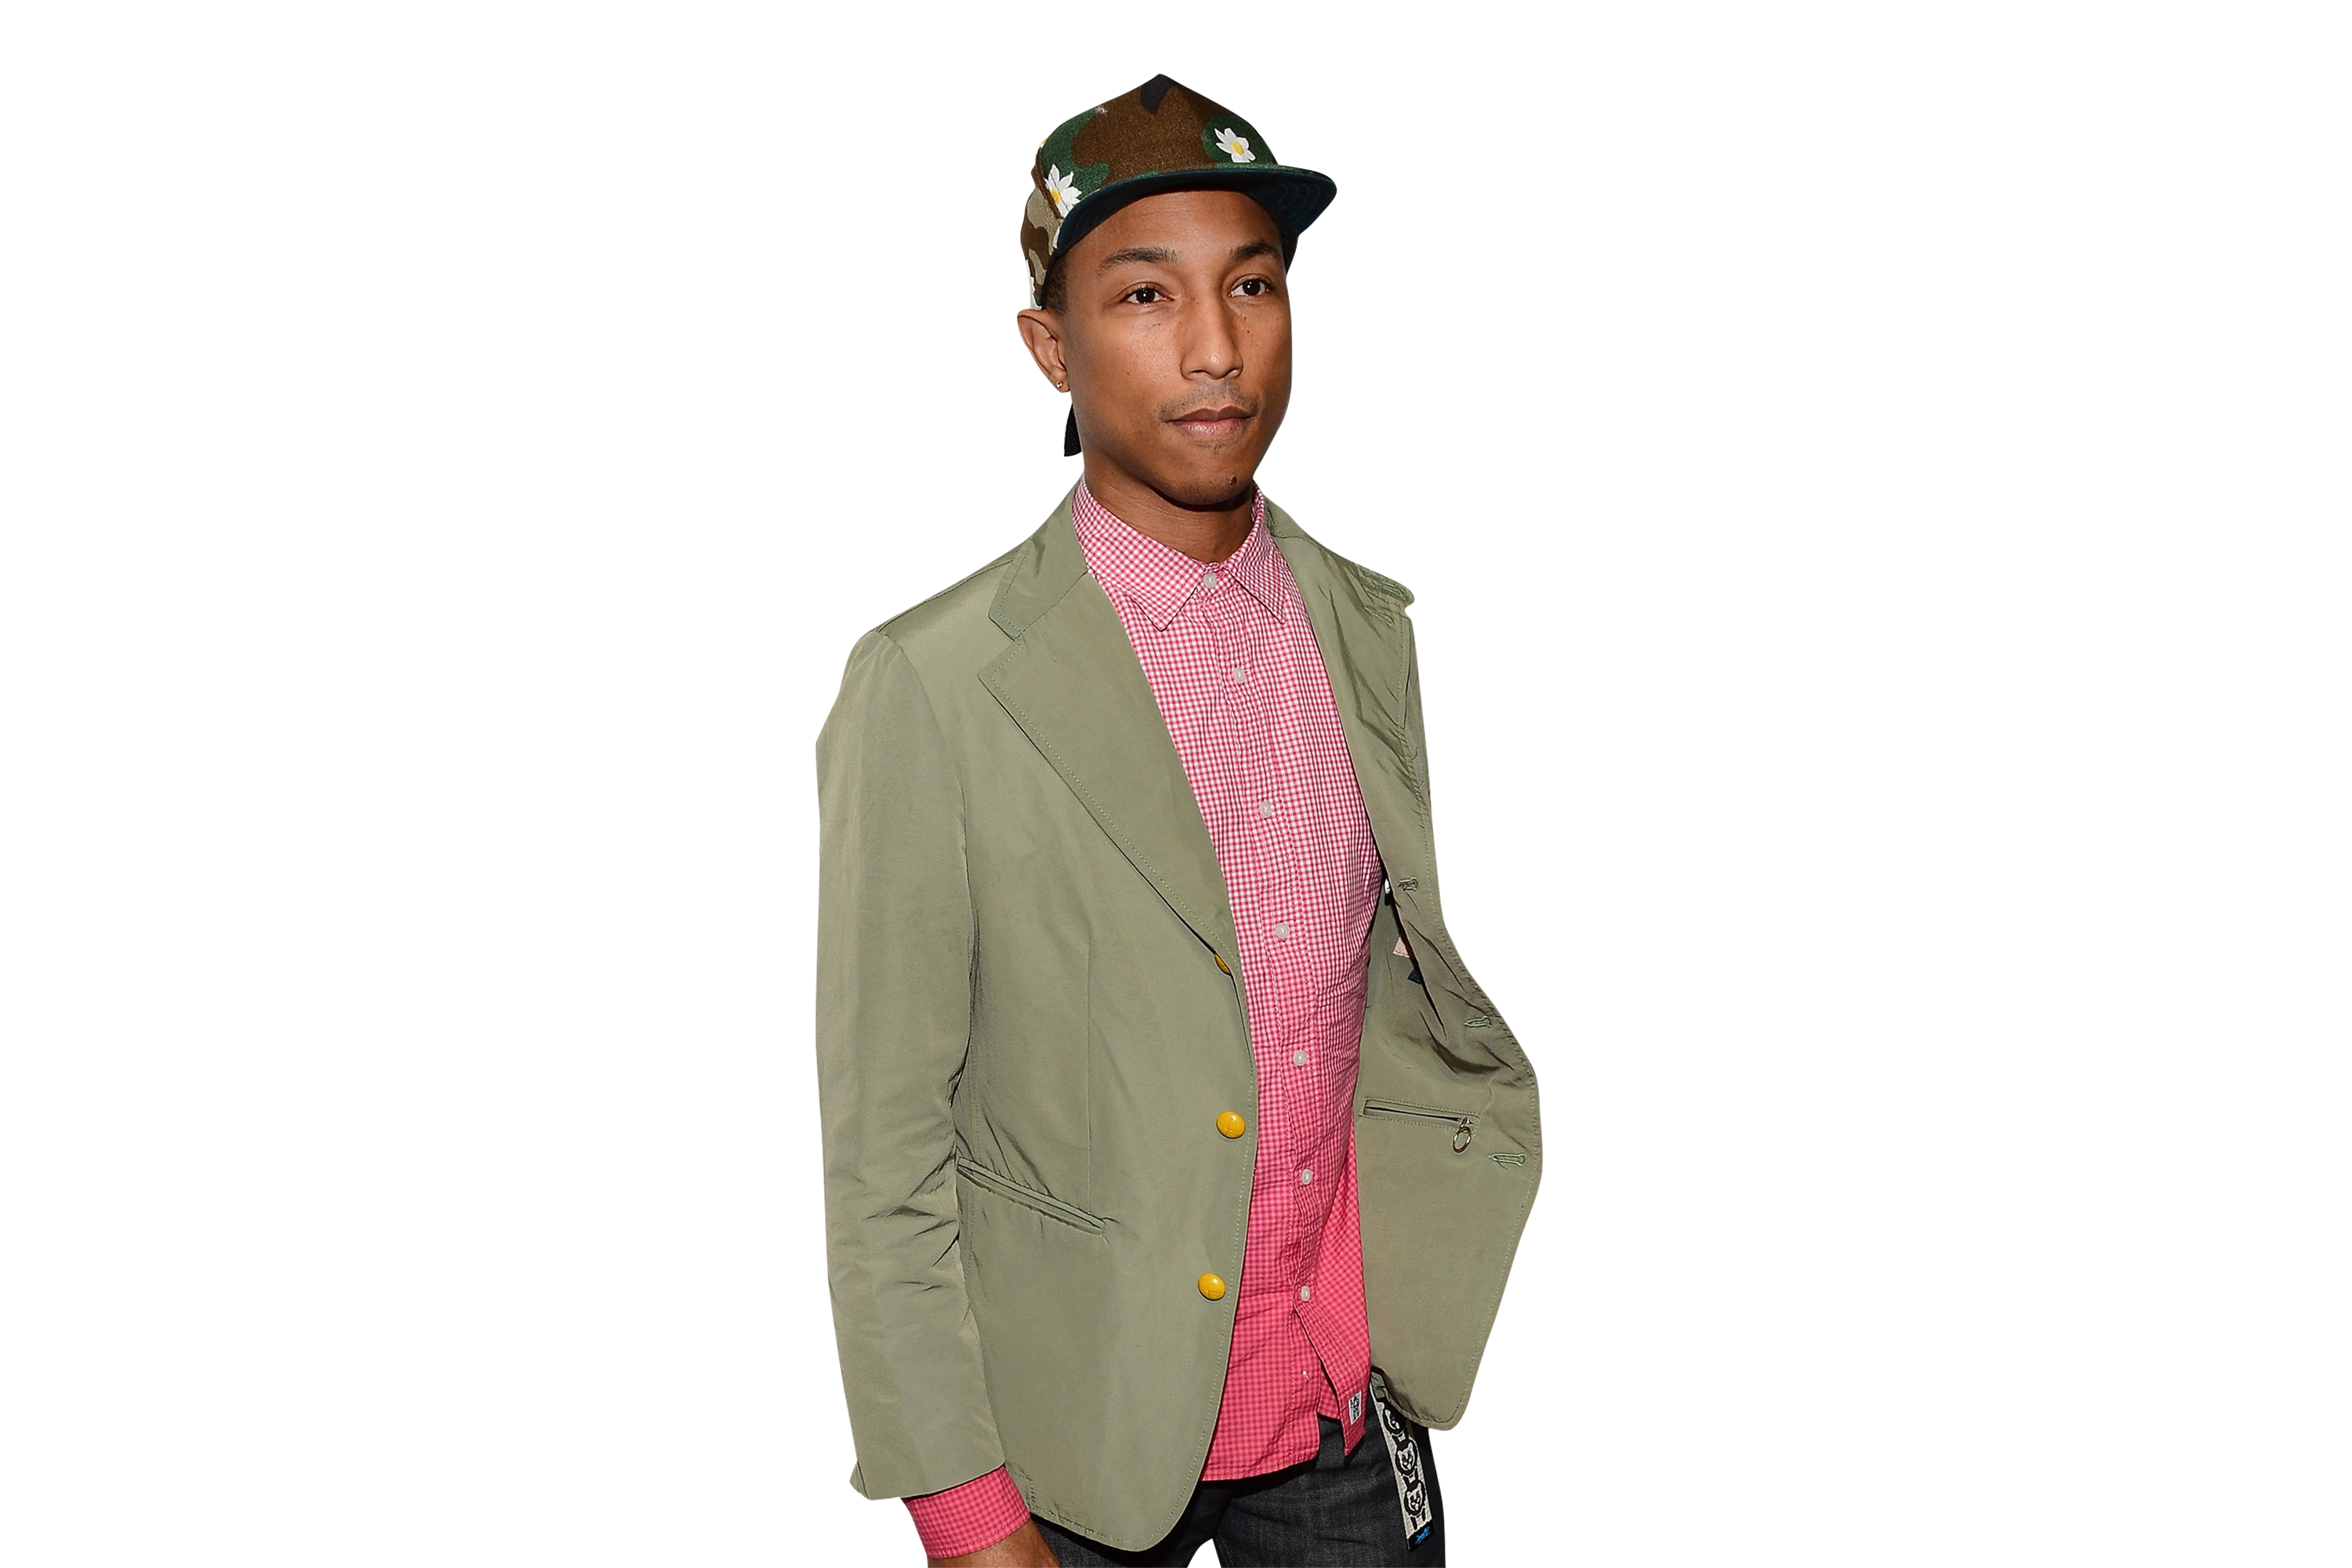 Pharrell High Quality Background Wallpaper